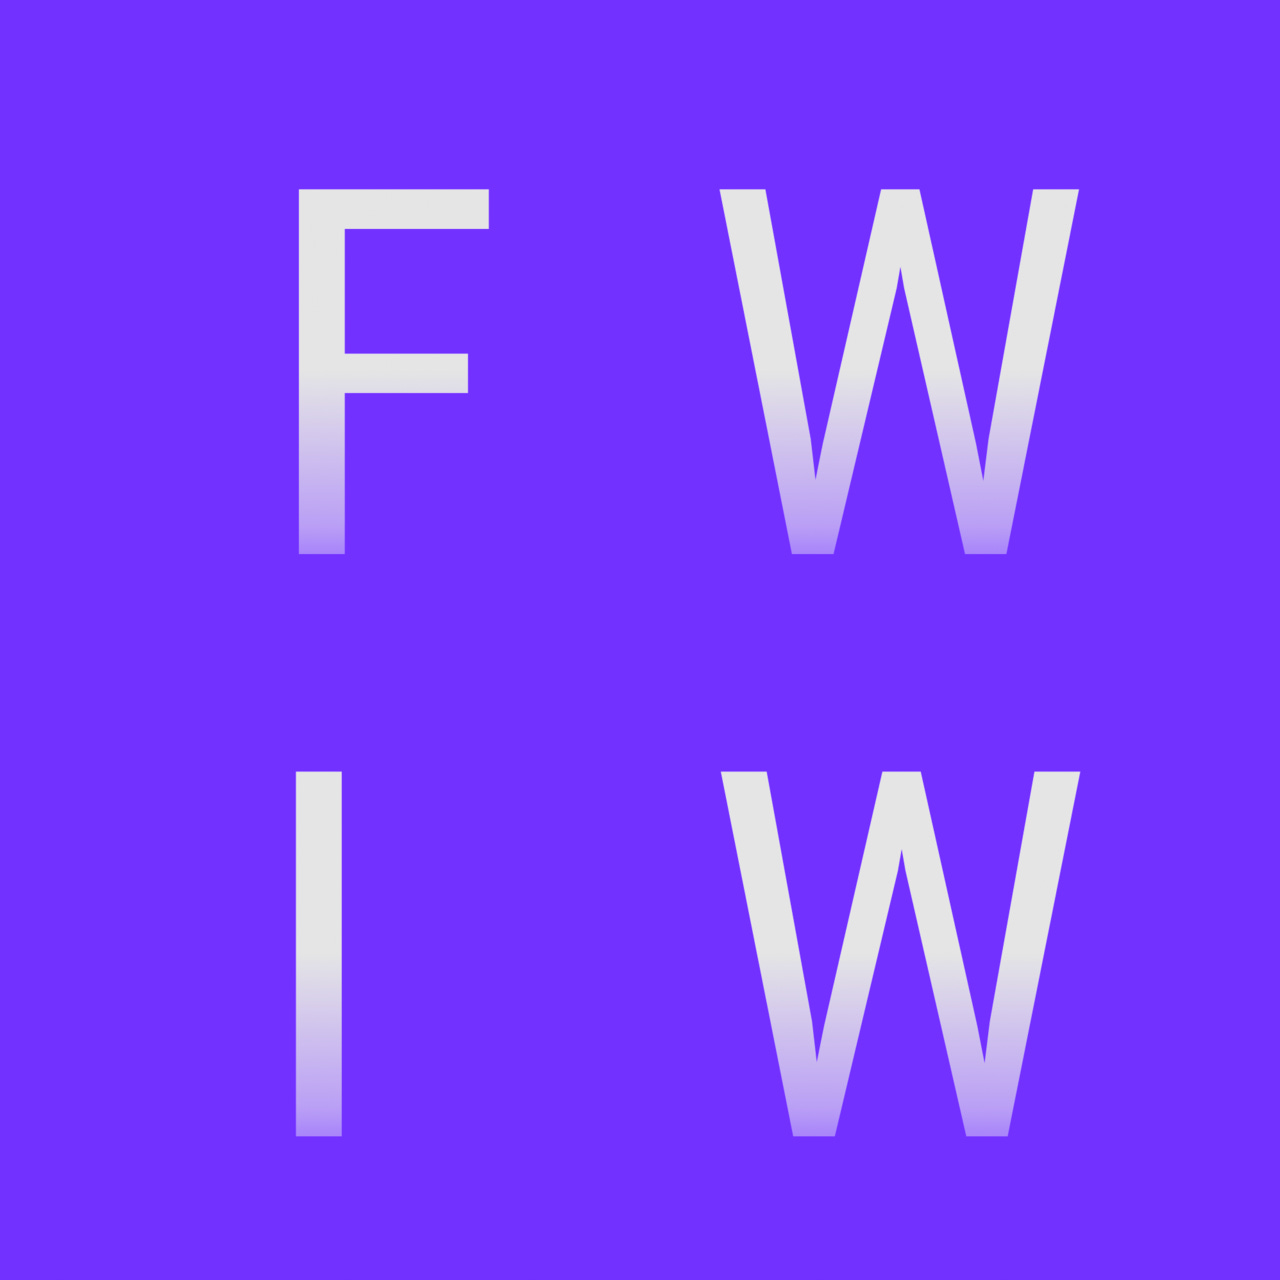 FWIW by David Tvrdon